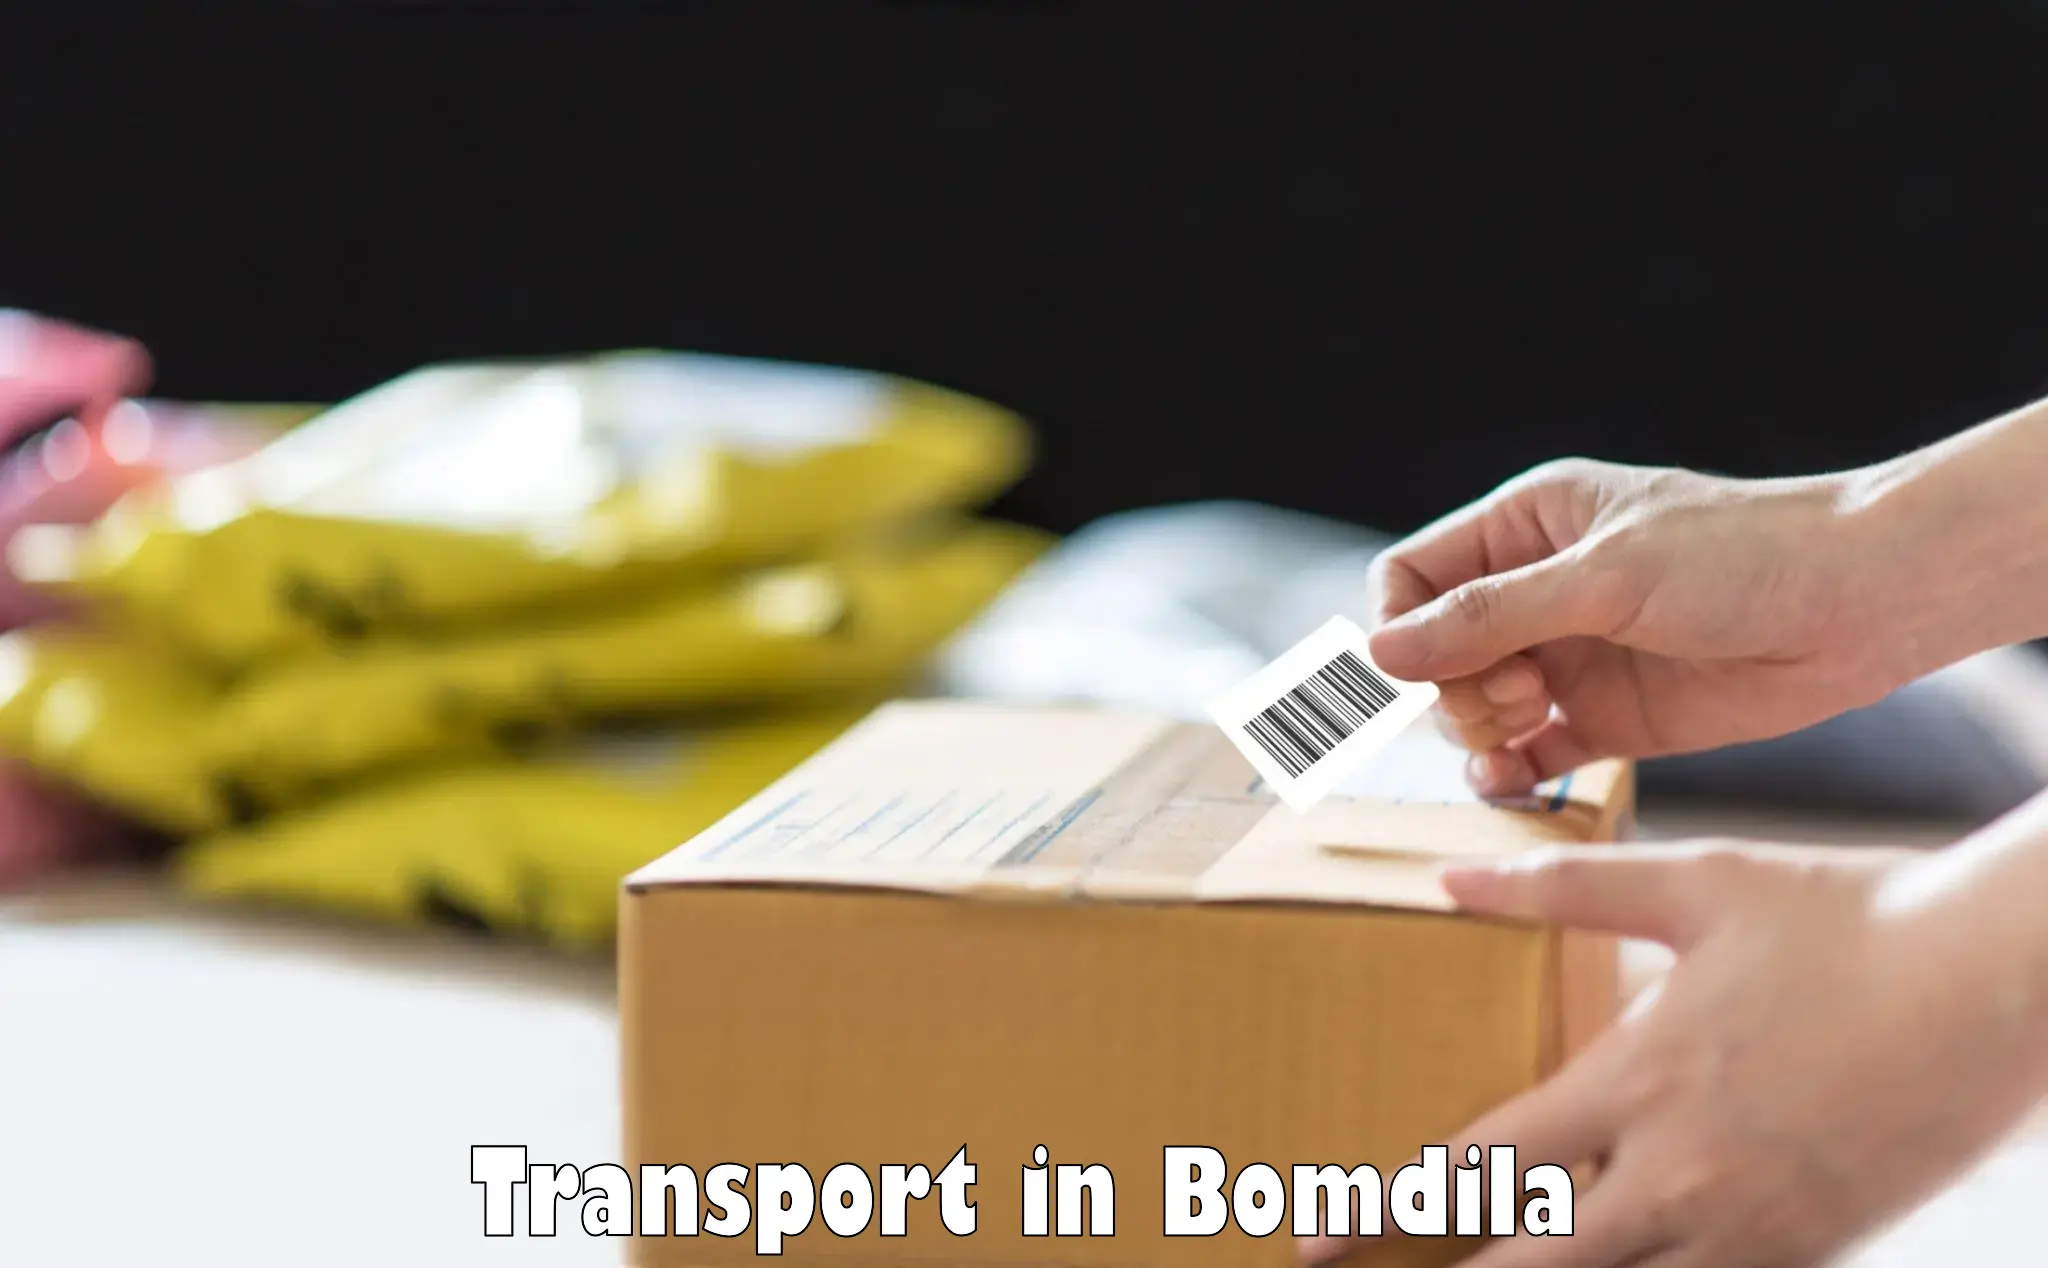 Sending bike to another city in Bomdila